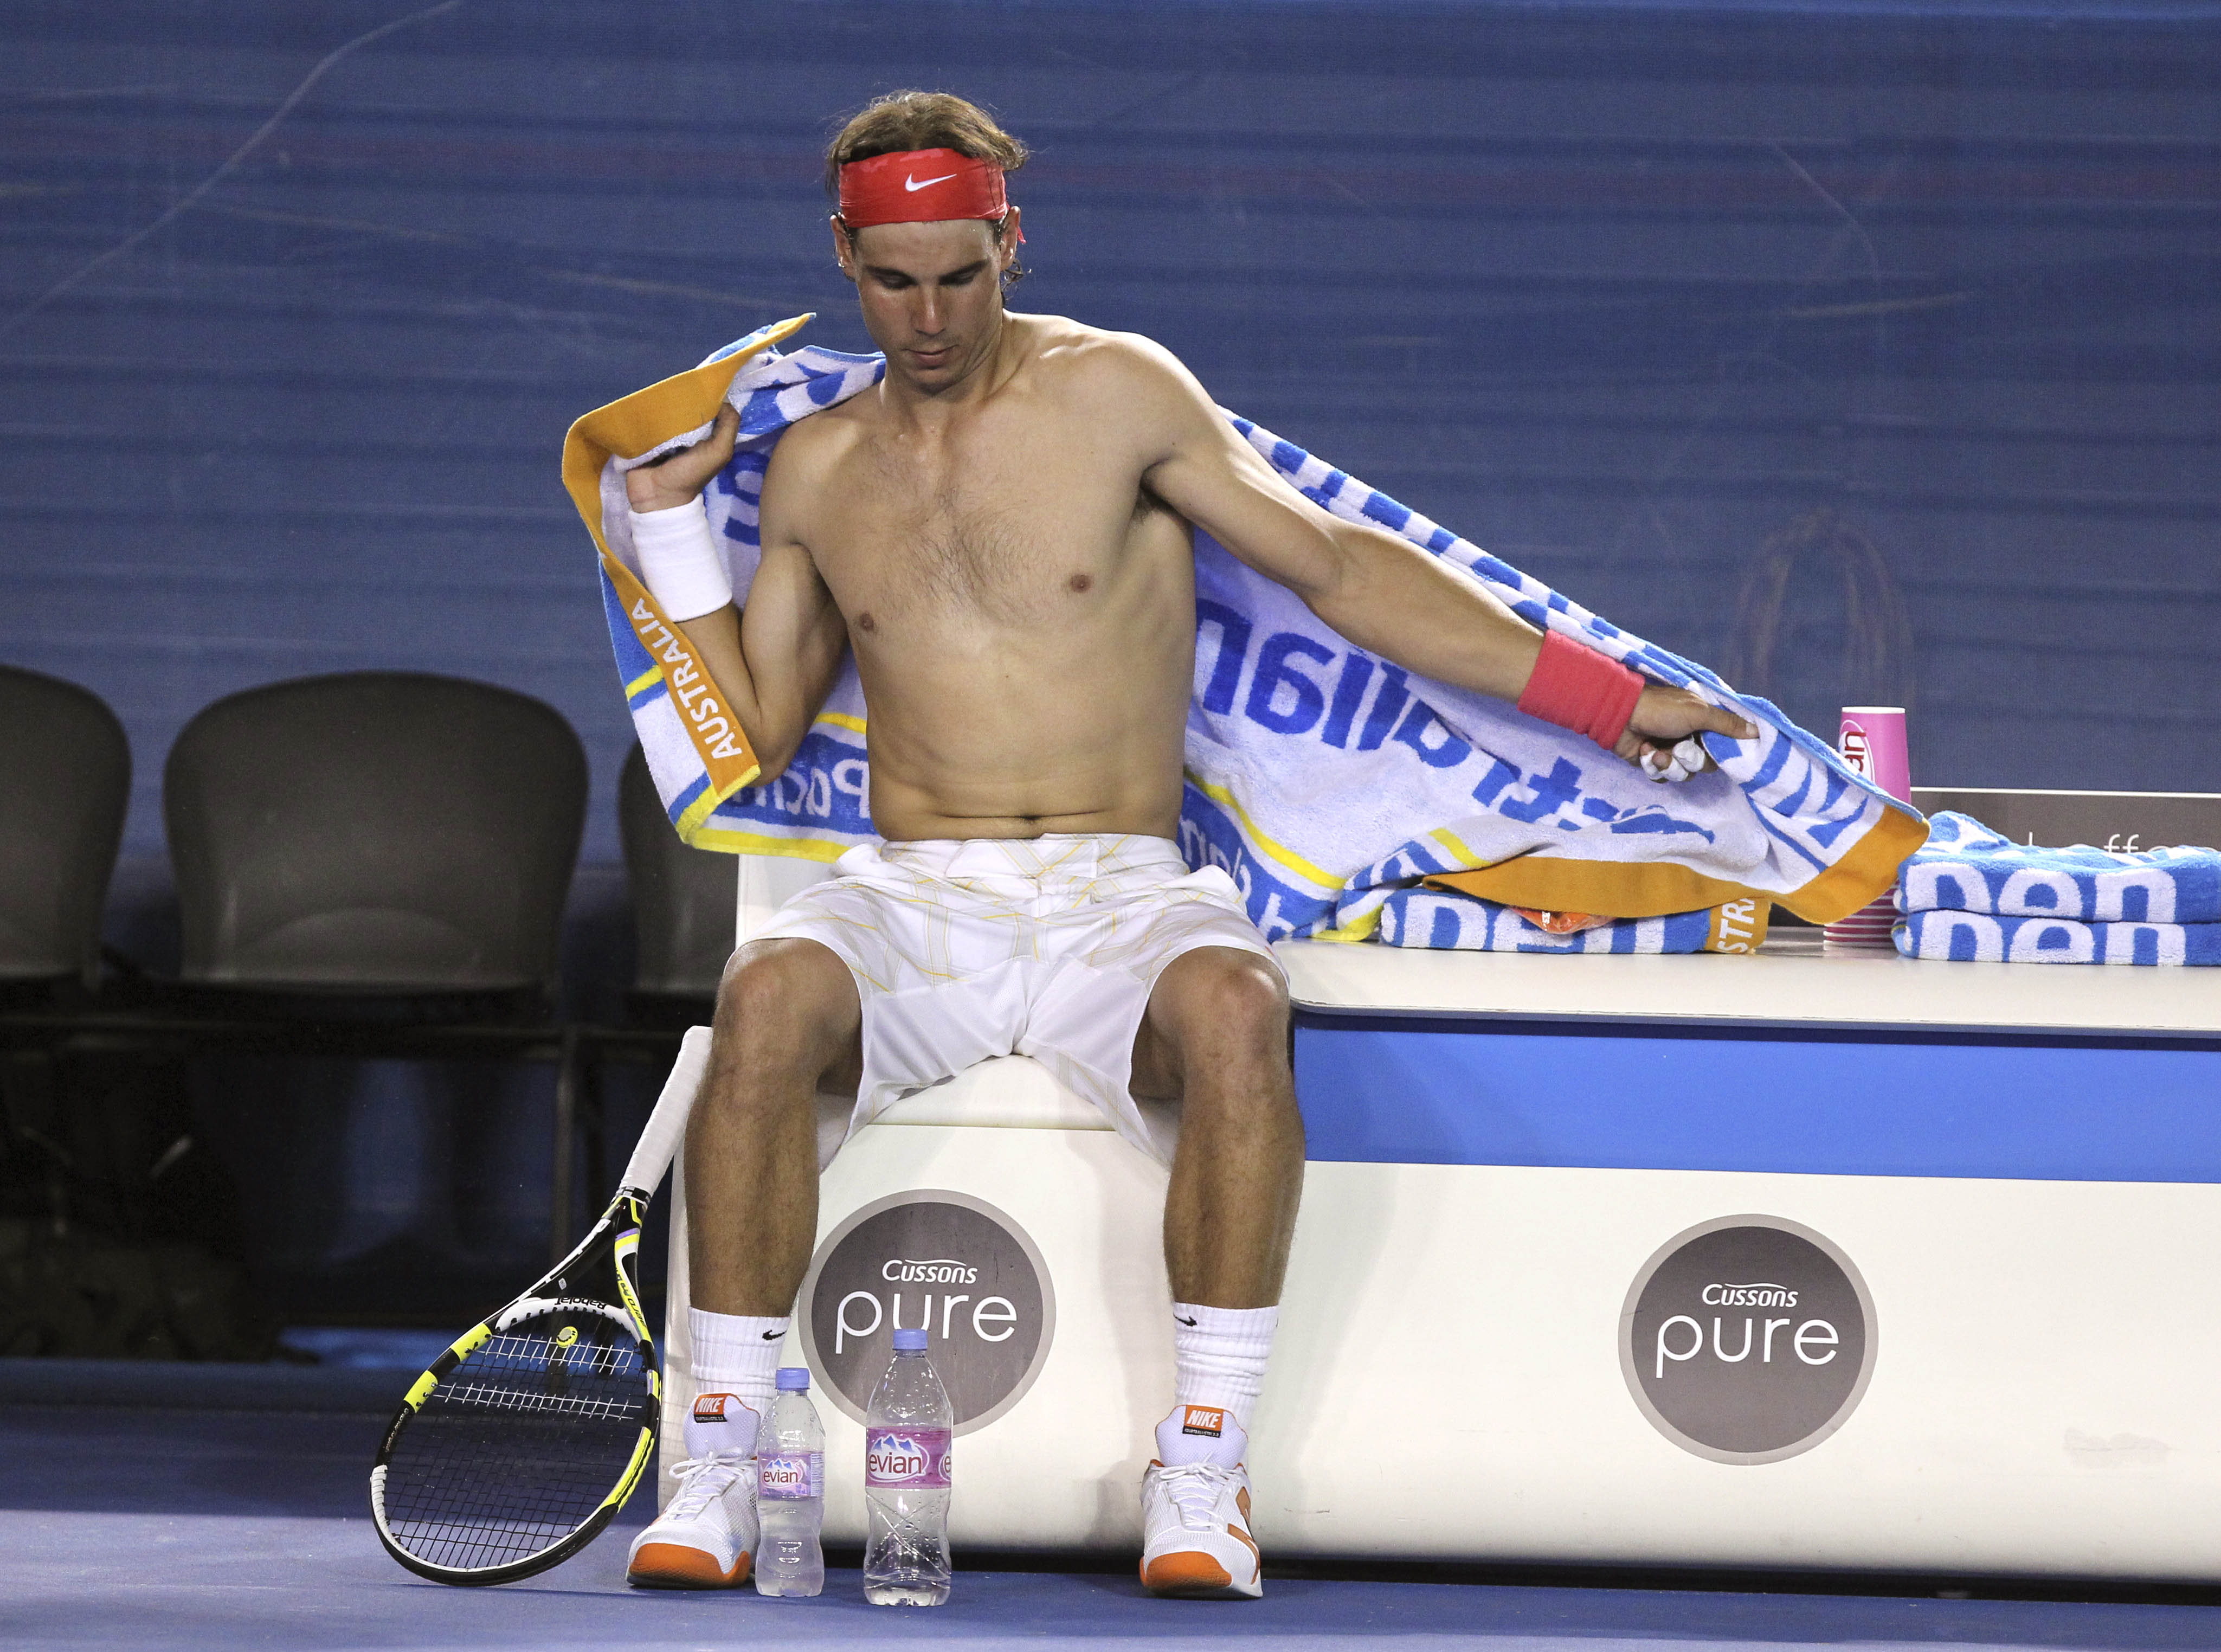 Juan Martin del Potro, Rafael Nadal, Australian Open, Kim Clijsters, Andy Murray, Tennis, Roger Federer, Andy Roddick